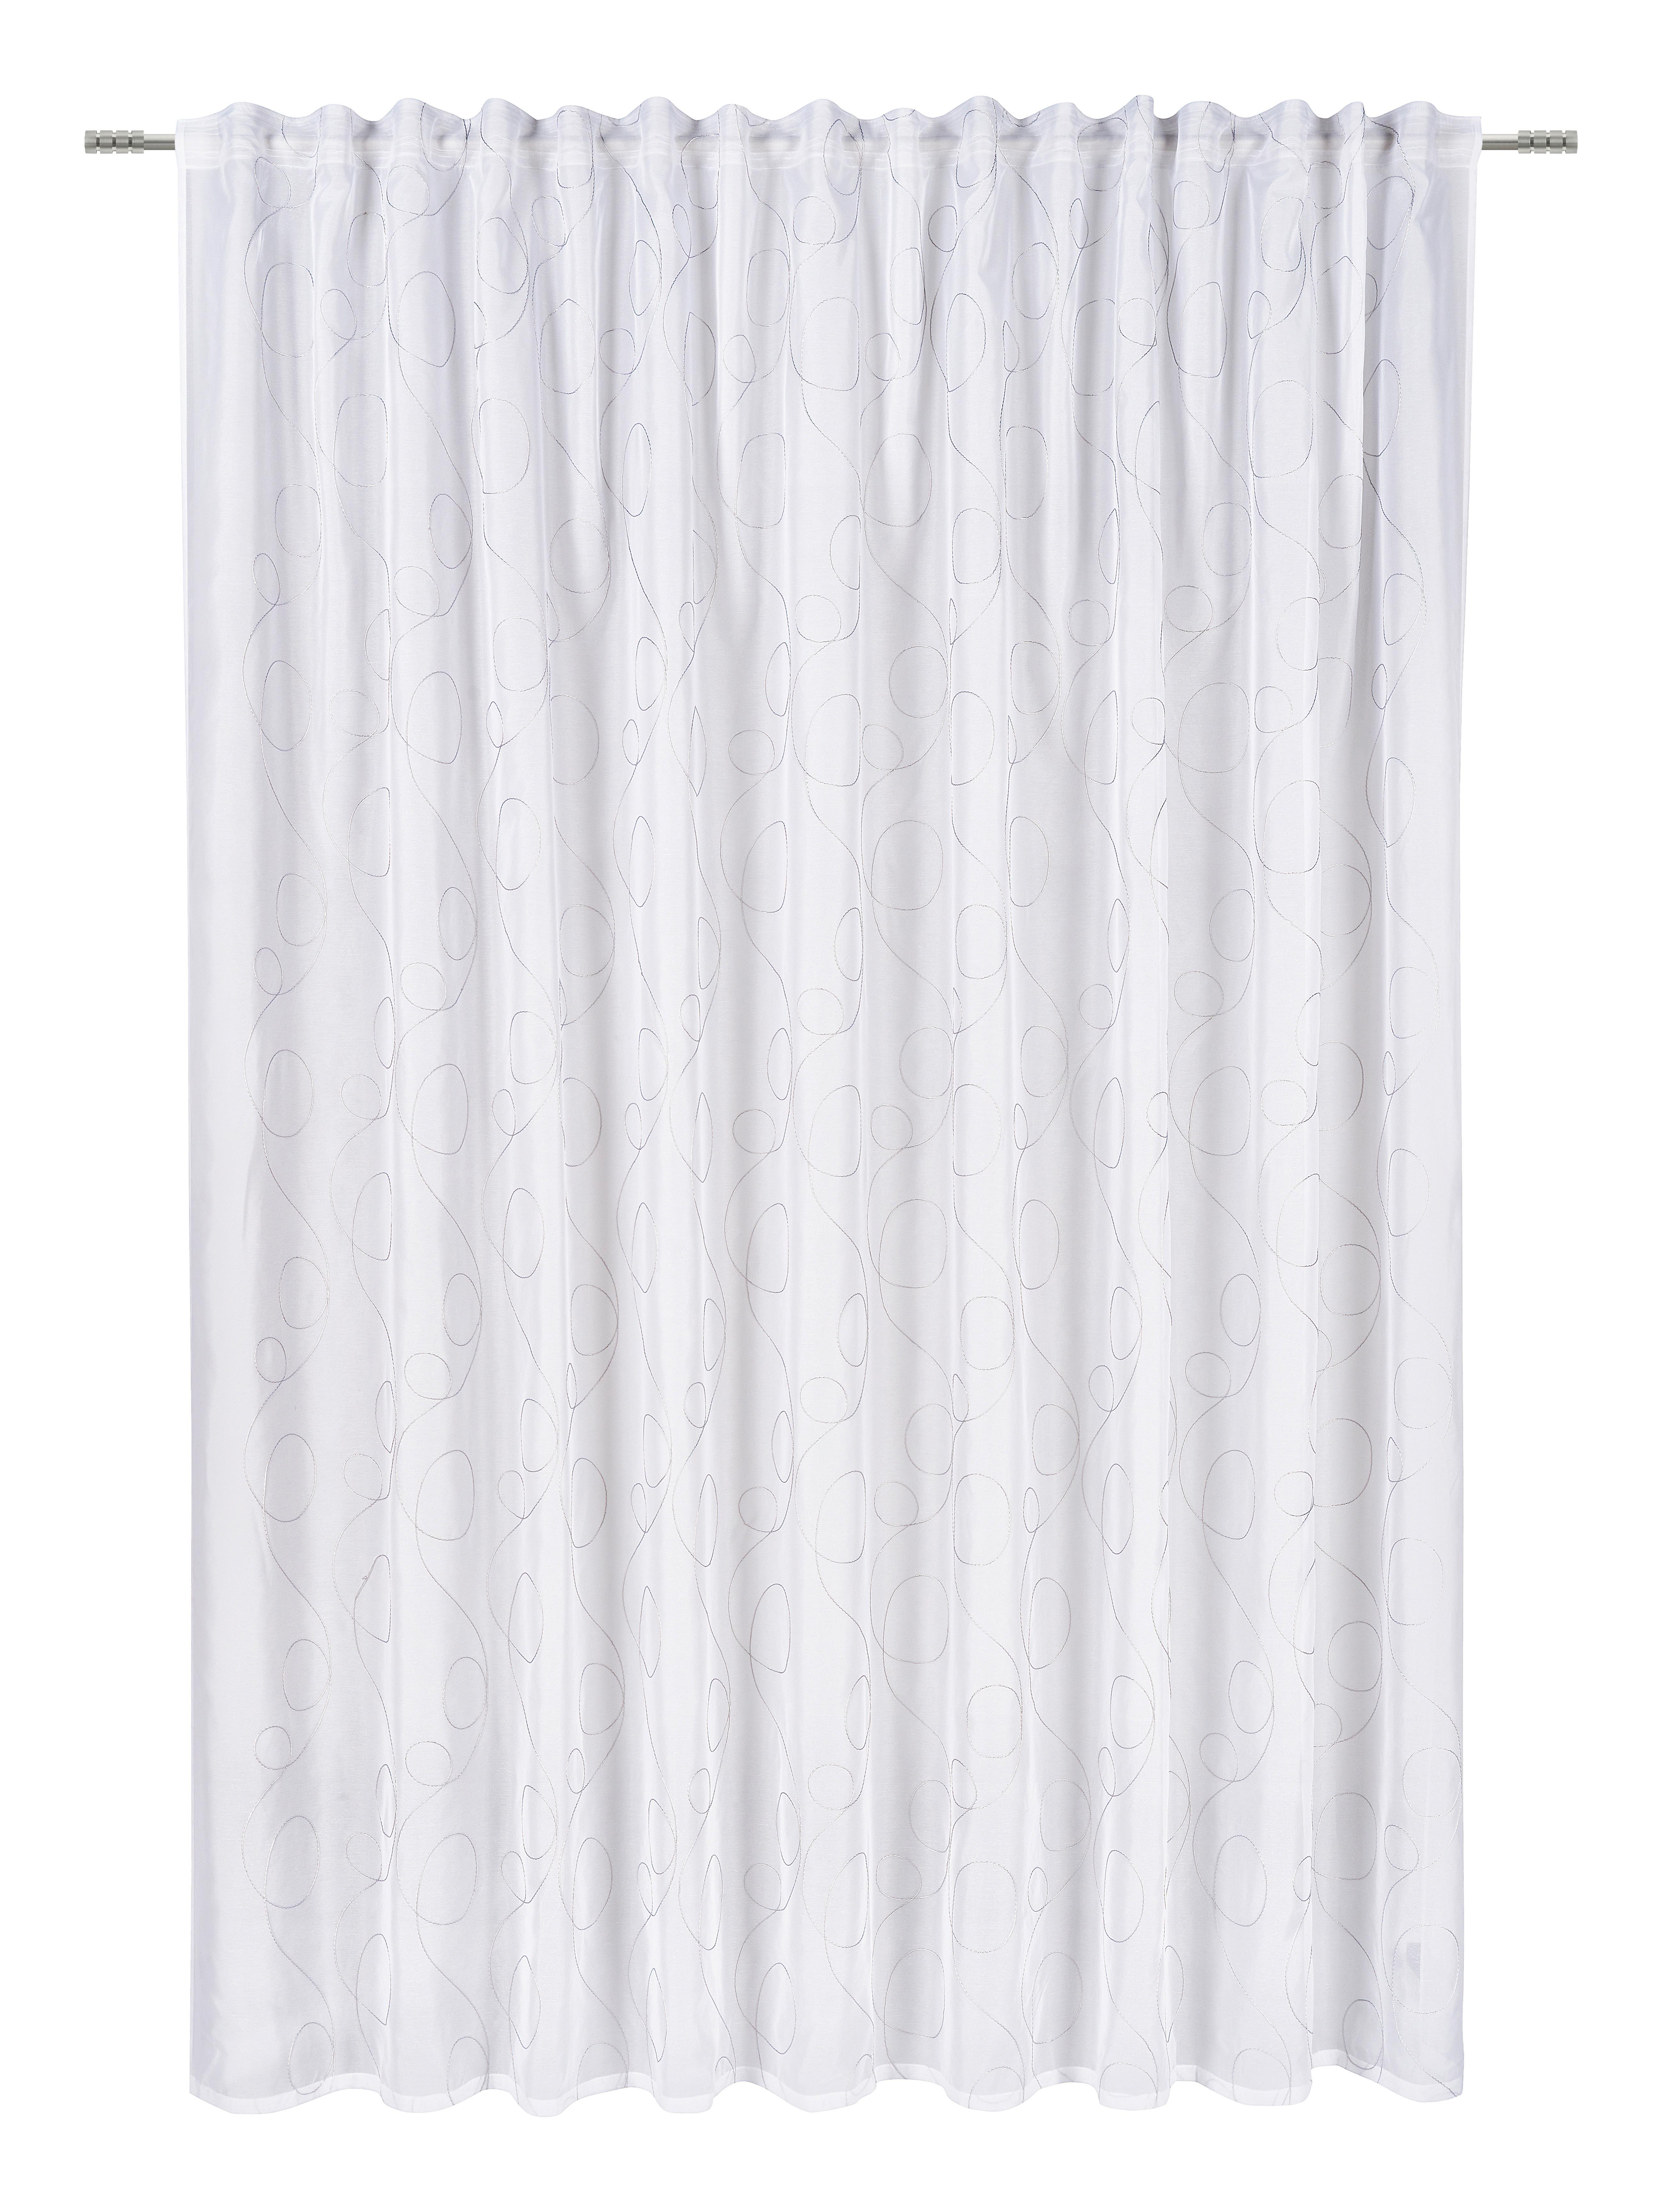 Gotova Zavjesa 300/255cm Marion  Store 3 - bijela/antracit, Modern, tekstil (300/255cm) - Modern Living